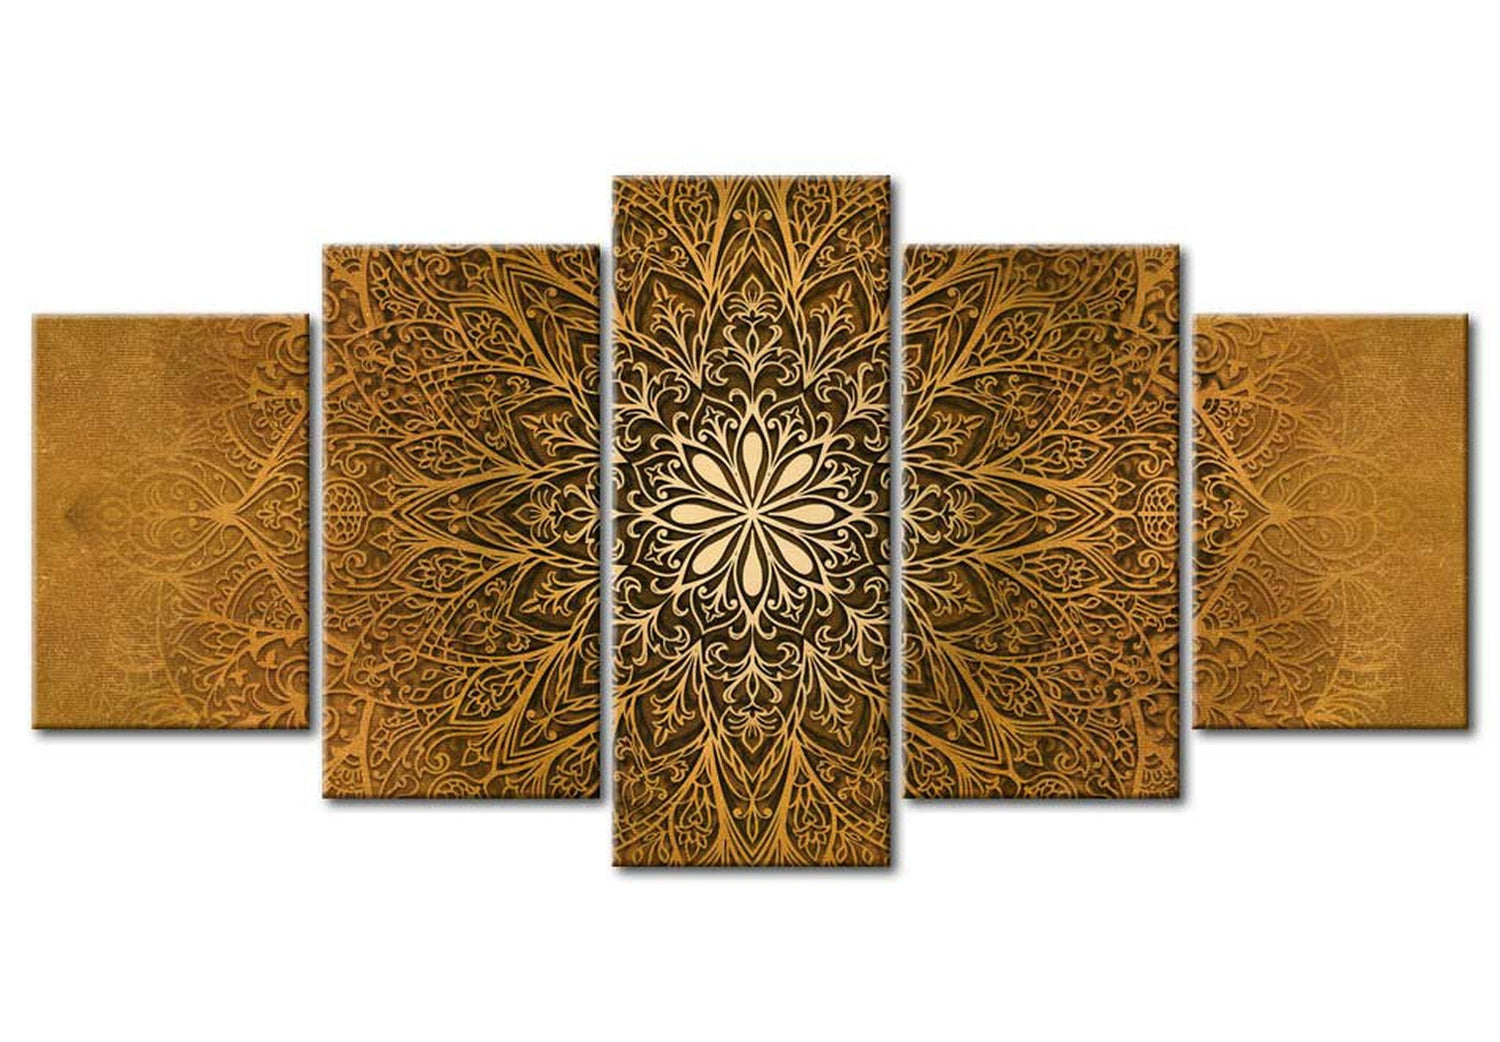 Mandala Canvas Wall Art - Spiritual Illumination - 5 Pieces